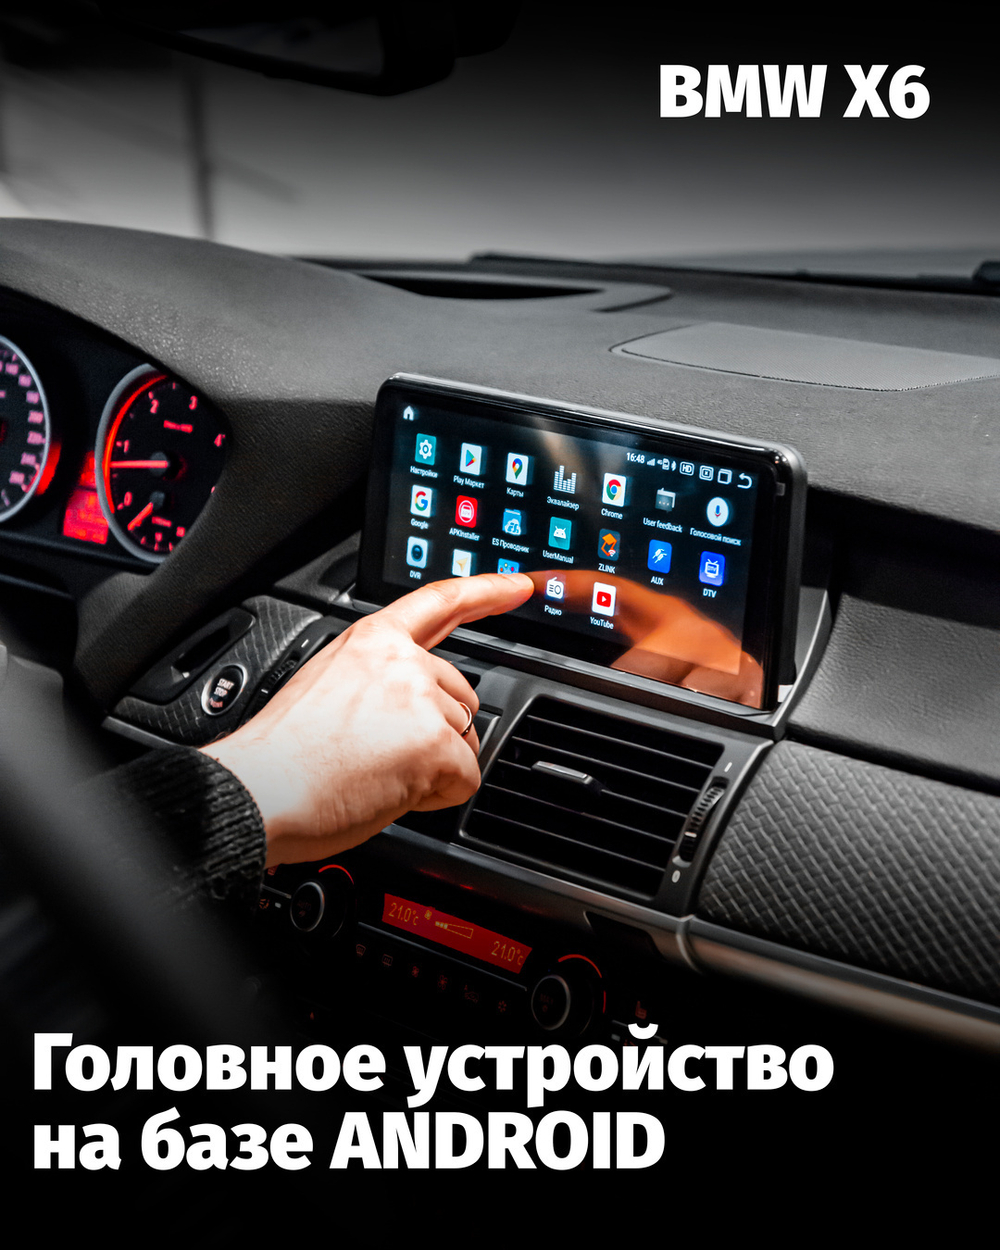 Android-монитор вместо штатного экрана в авто